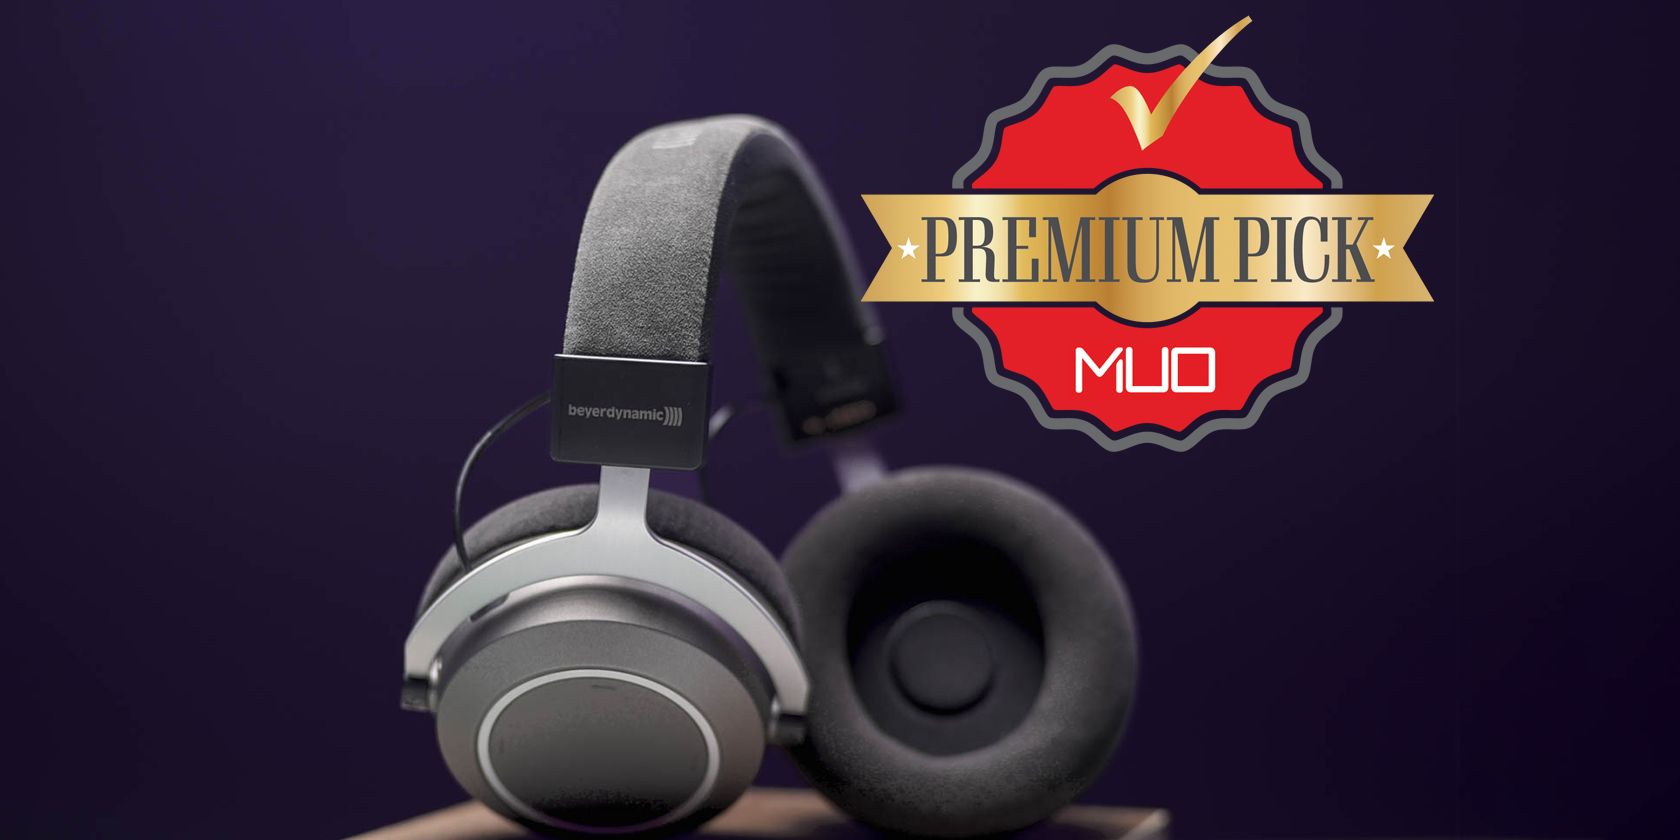 Beyerdynamic Amiron review: comfortable headphones, quality sound